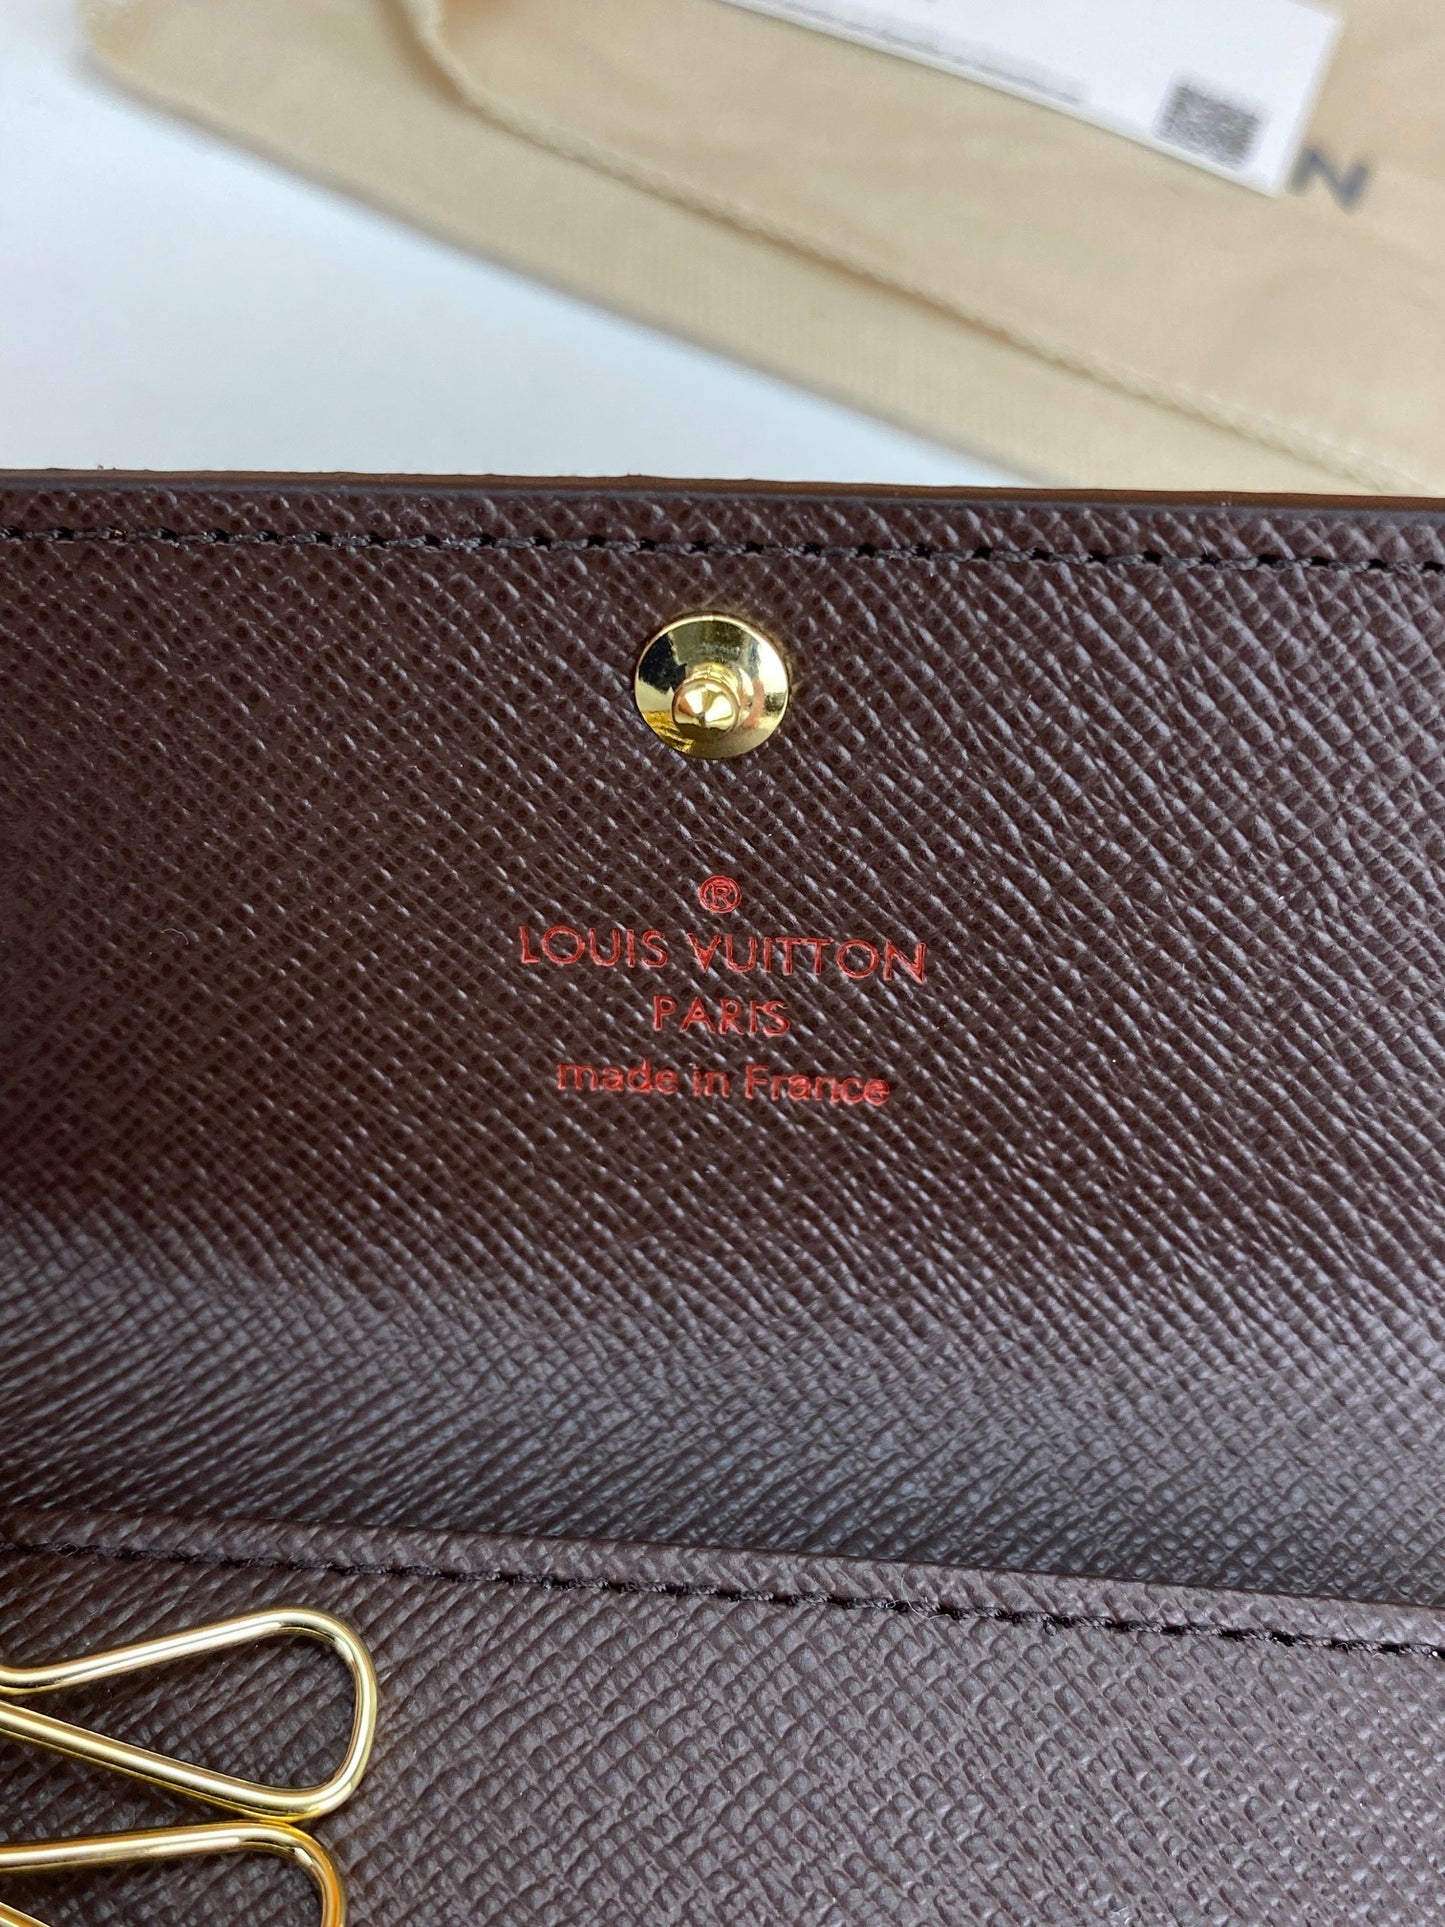 Louis Vuitton 6 Key Ring Holder in Damier Ebene 